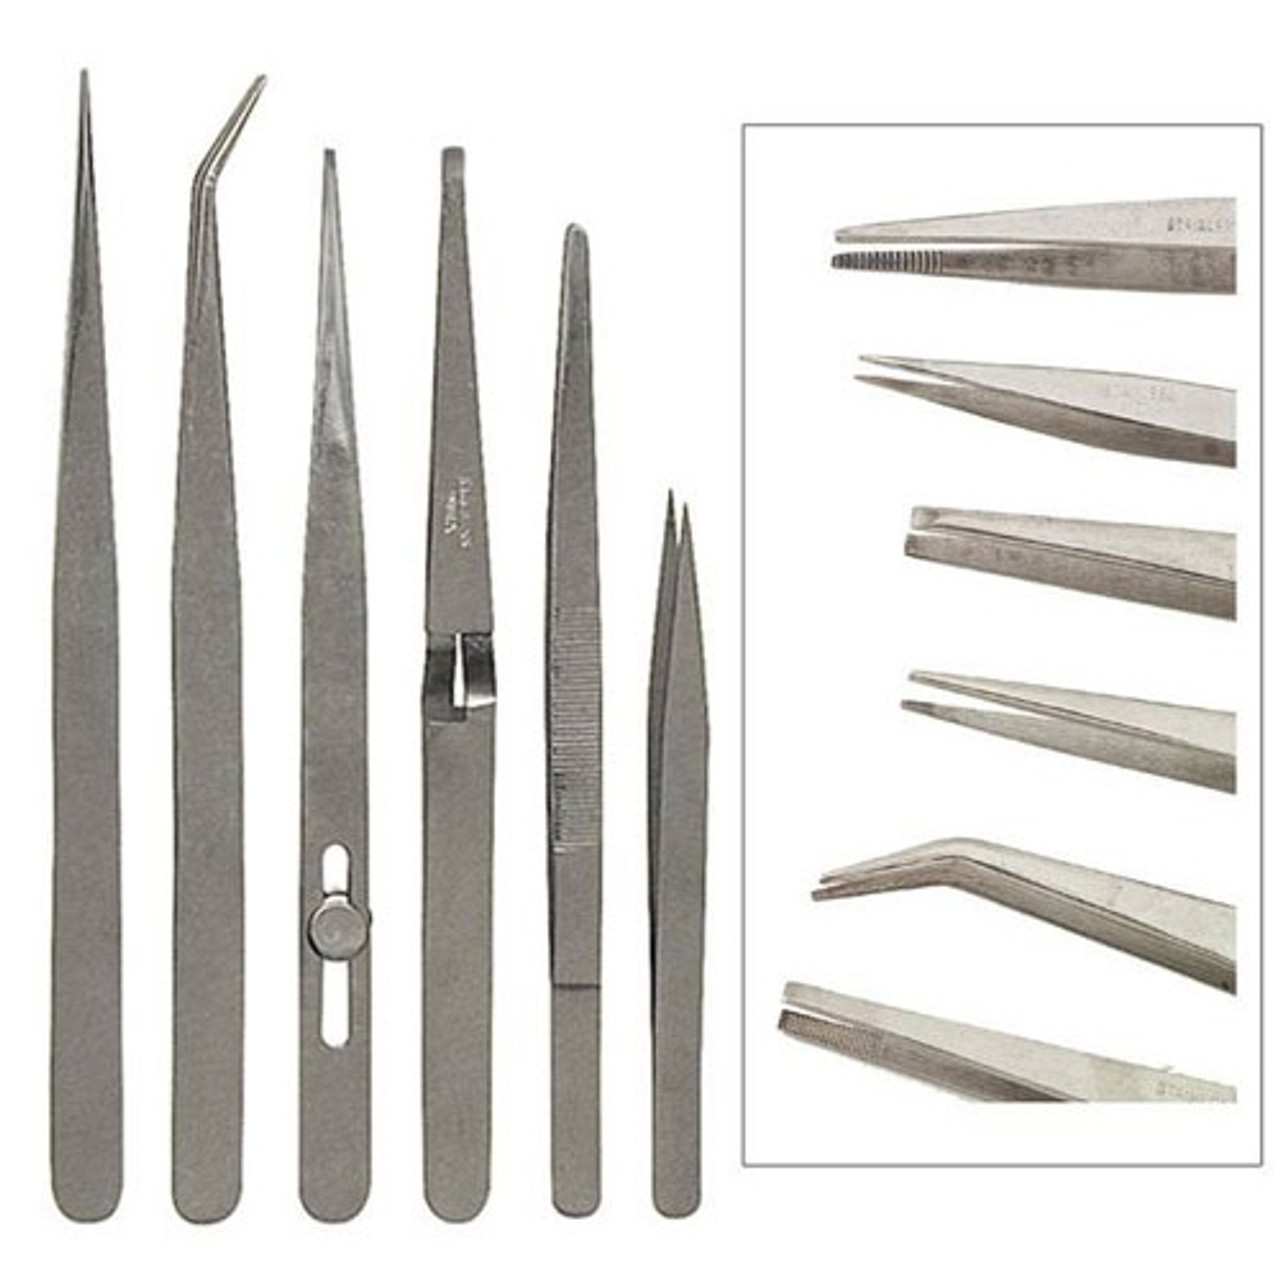  HTS 171T6 6 Stainless Steel Hobby Tweezers : Tools & Home  Improvement